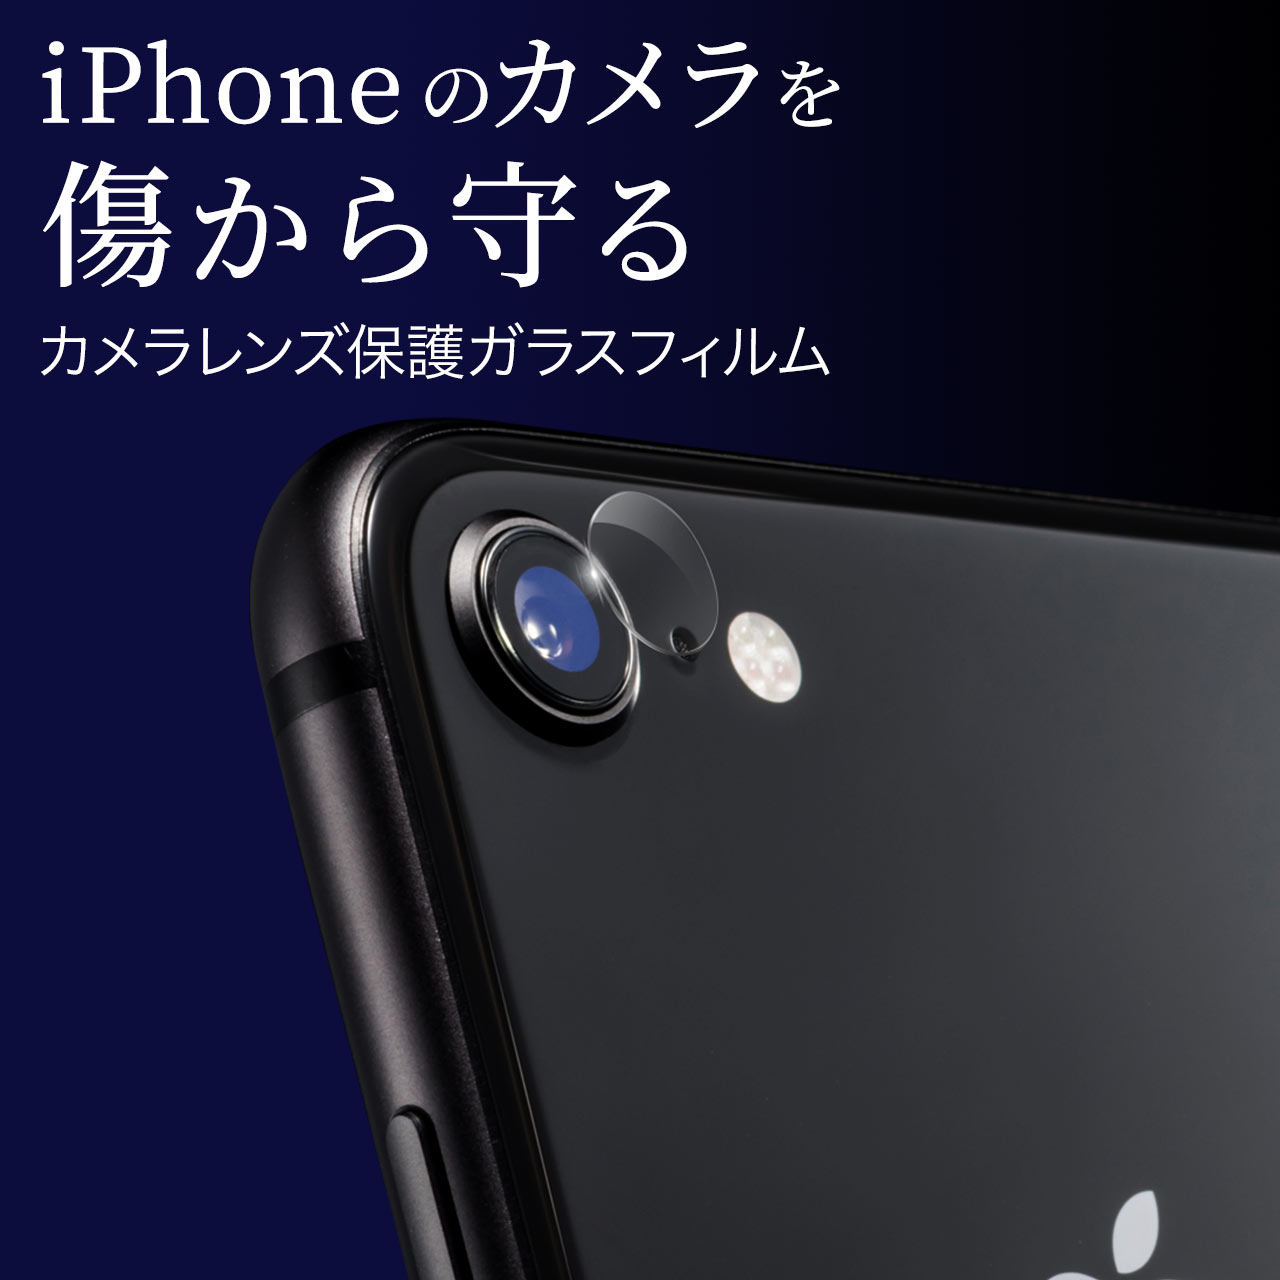 iPhoneJYیKXtBiiPhone 8E7pEAEgJpEdx9HE0.2mmENAj 200-LCD051C